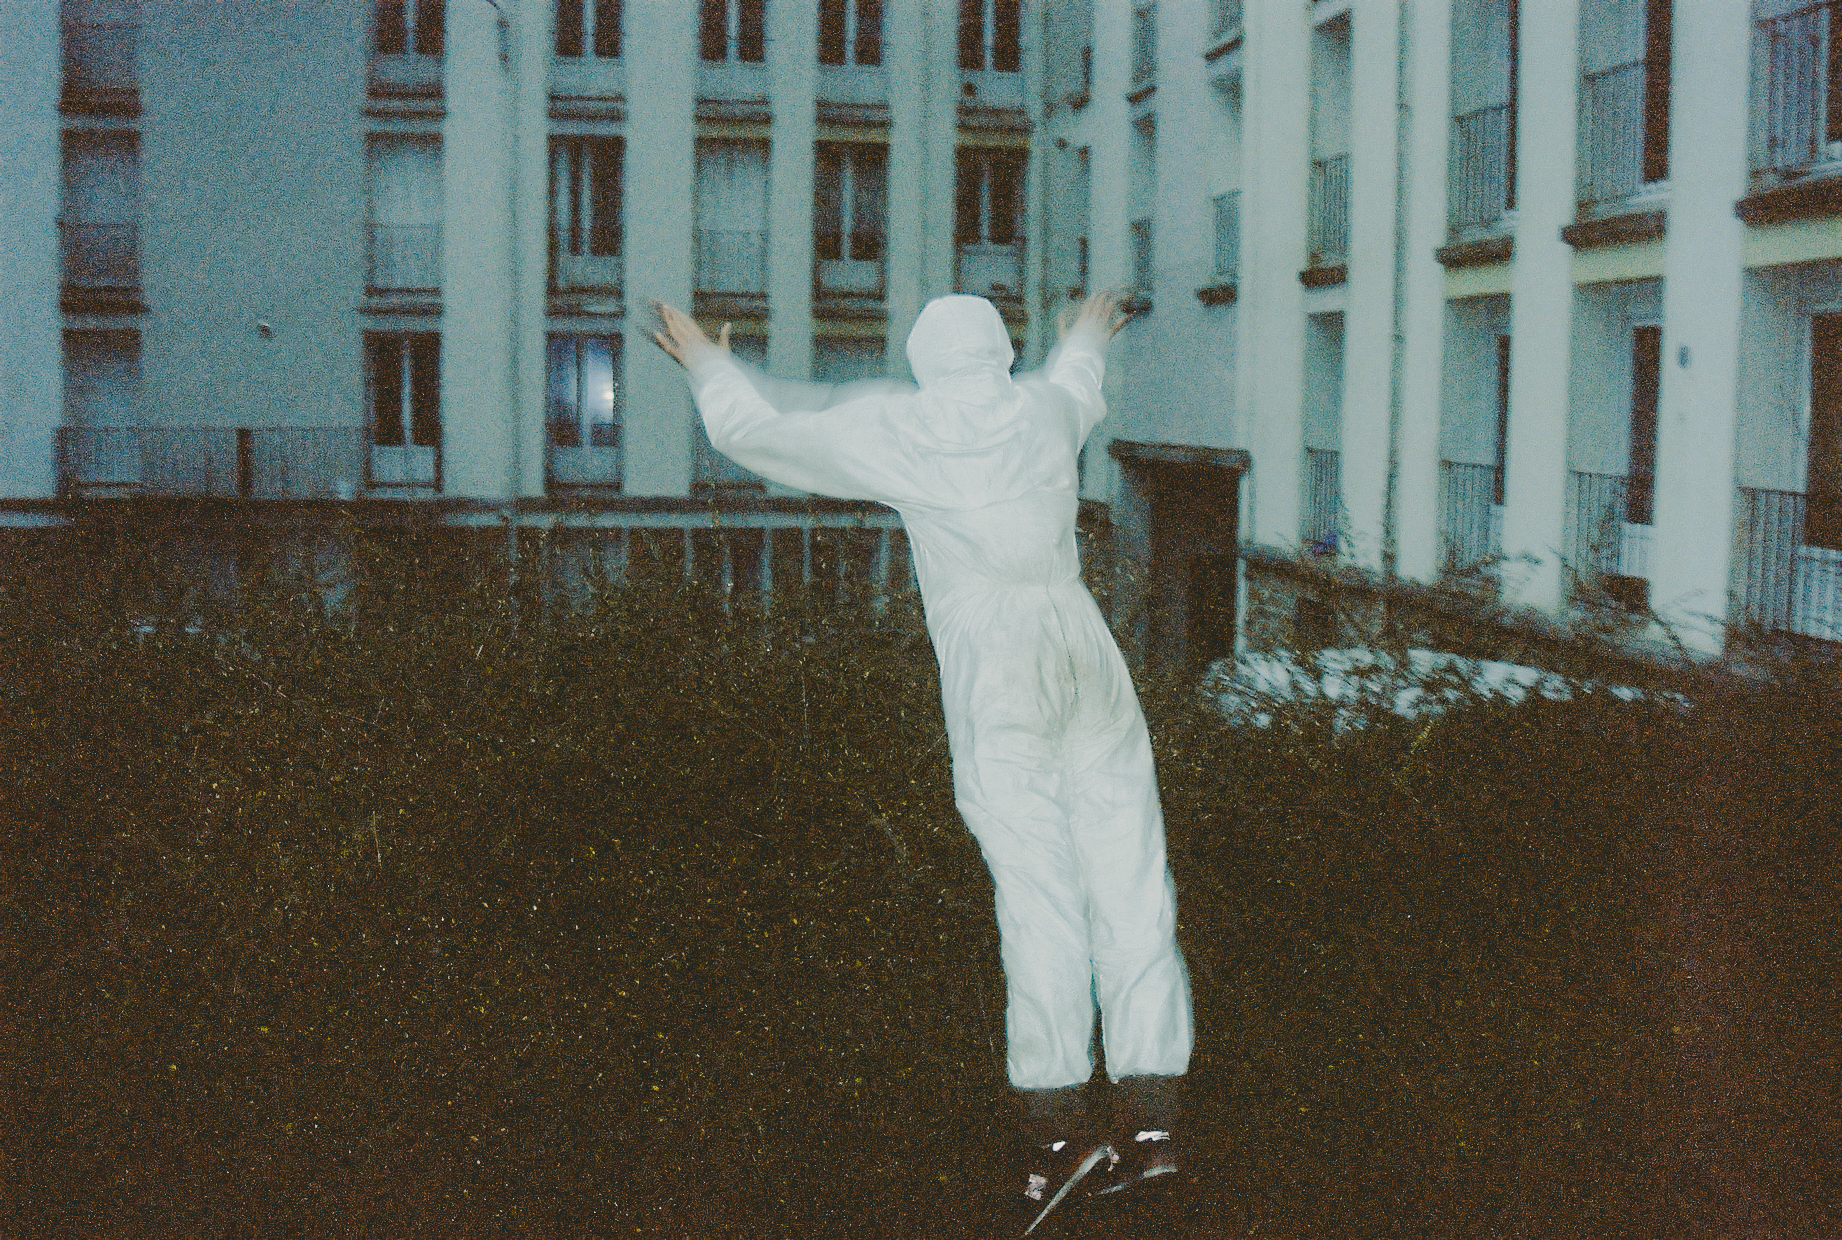 Mushary, Prancis, anak muda — lelaki berpakaian boiler suit putih lompat ke semak-semak